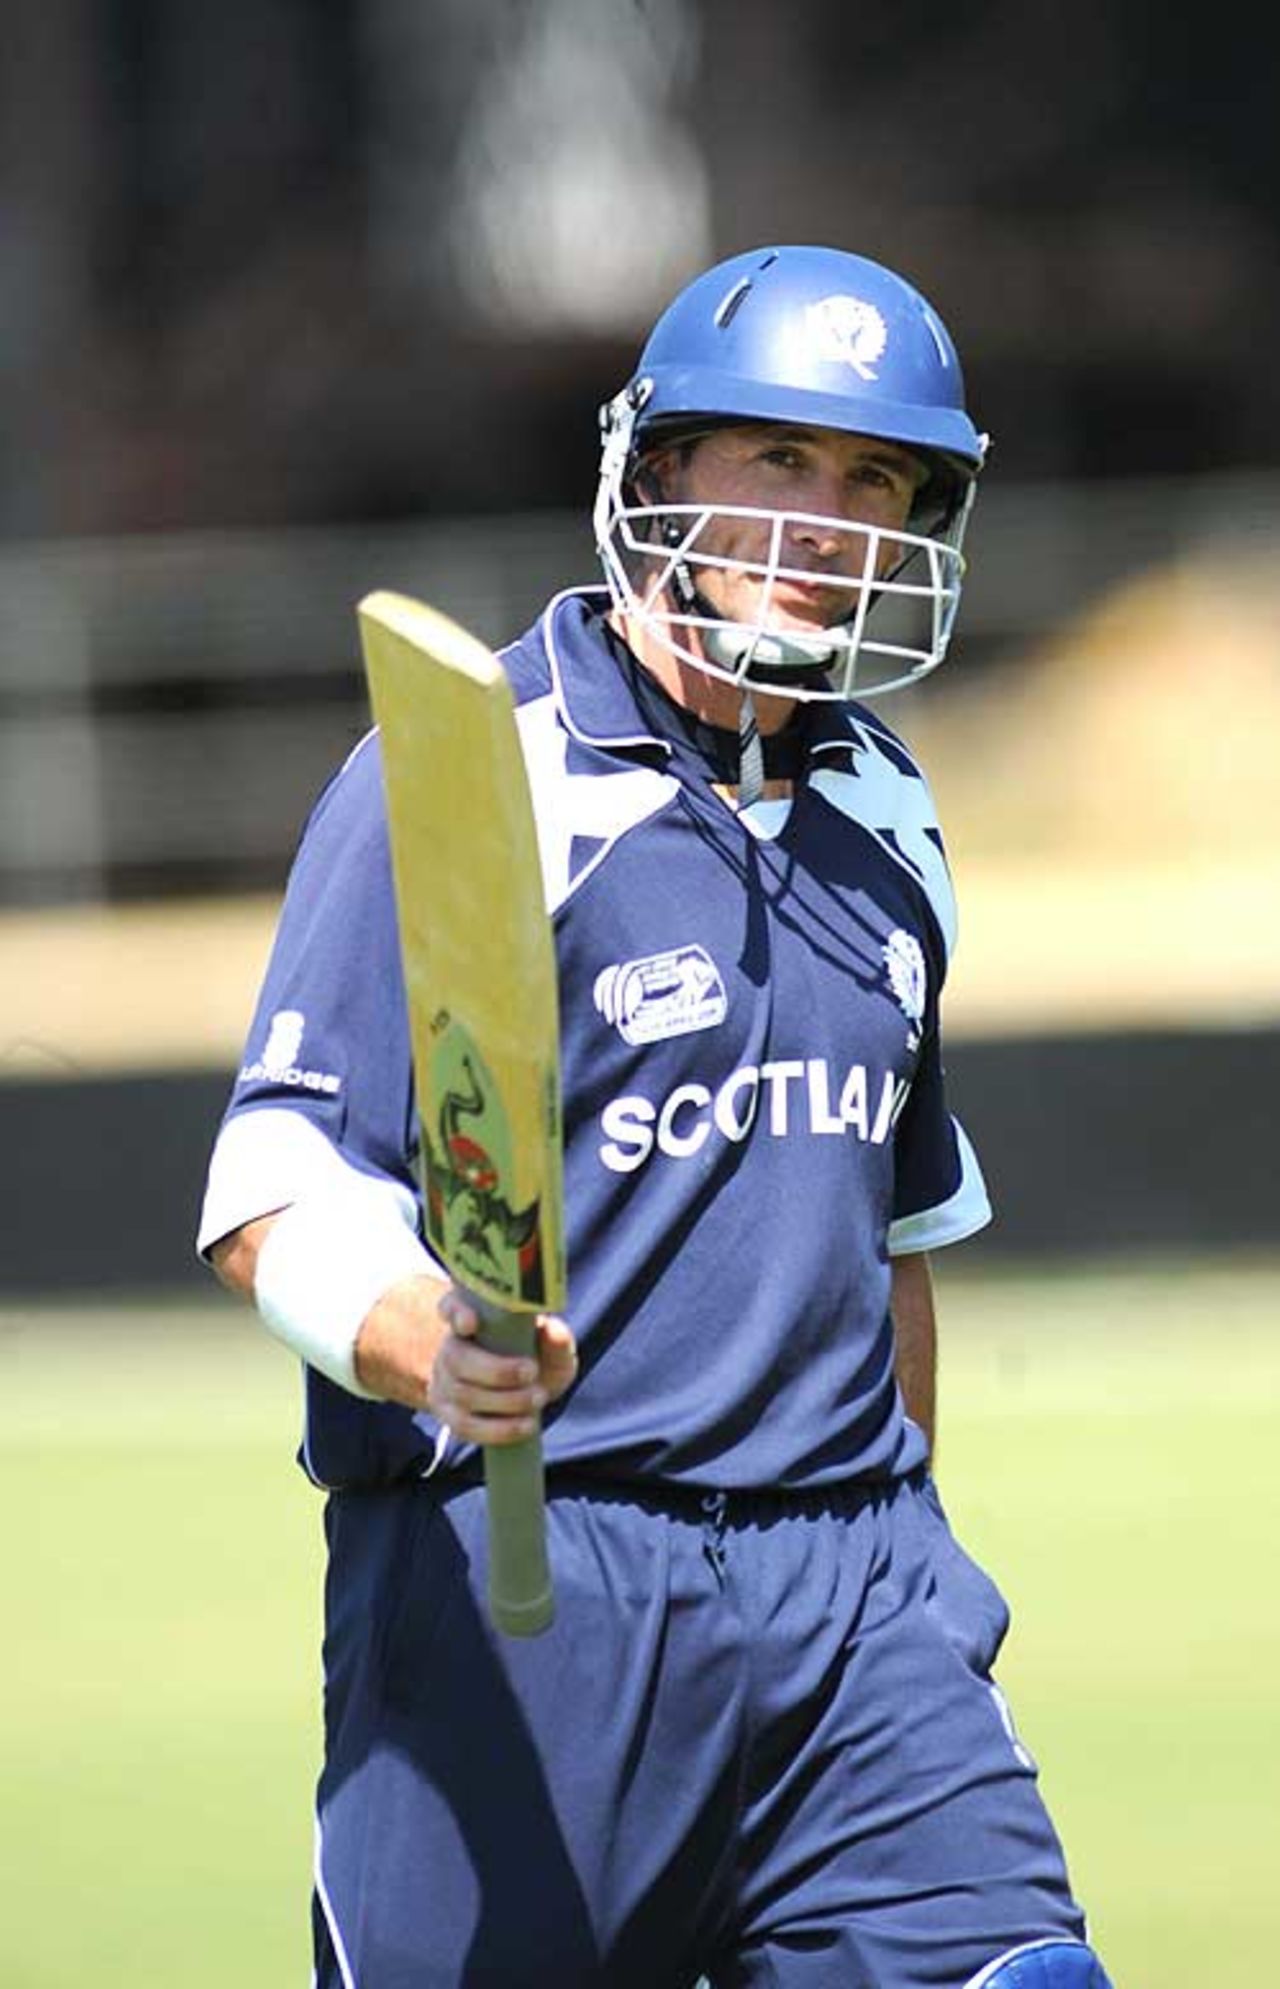 Gavin Hamilton raises his bat on crossing his century, Scotland v UAE, ICC World Cup Qualifiers, Super Eights, Benoni, April 17, 2009